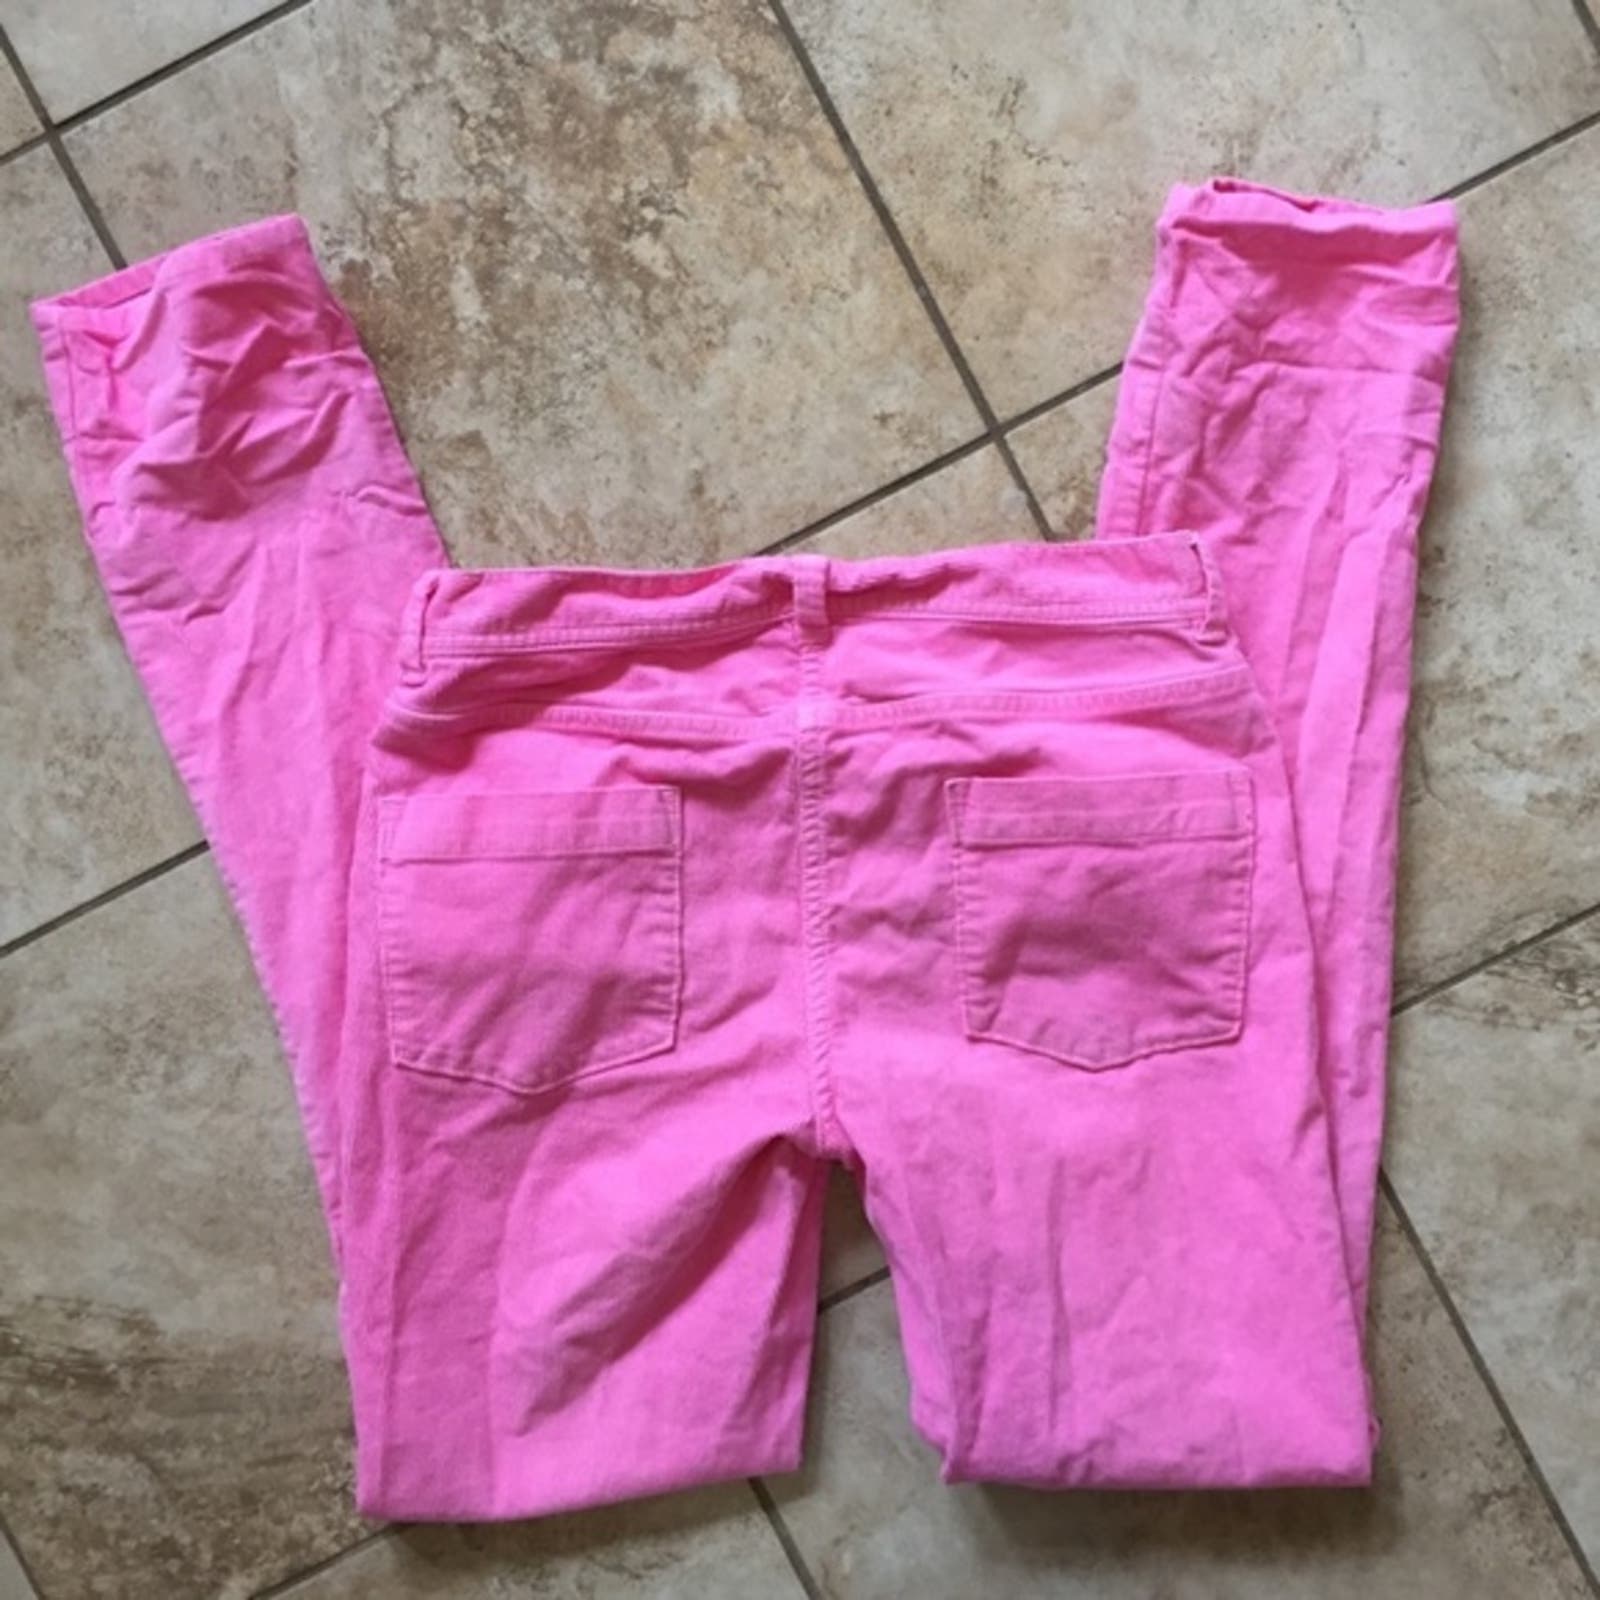 J. Crew Girls Pink Garment-Dyed Riley Cord